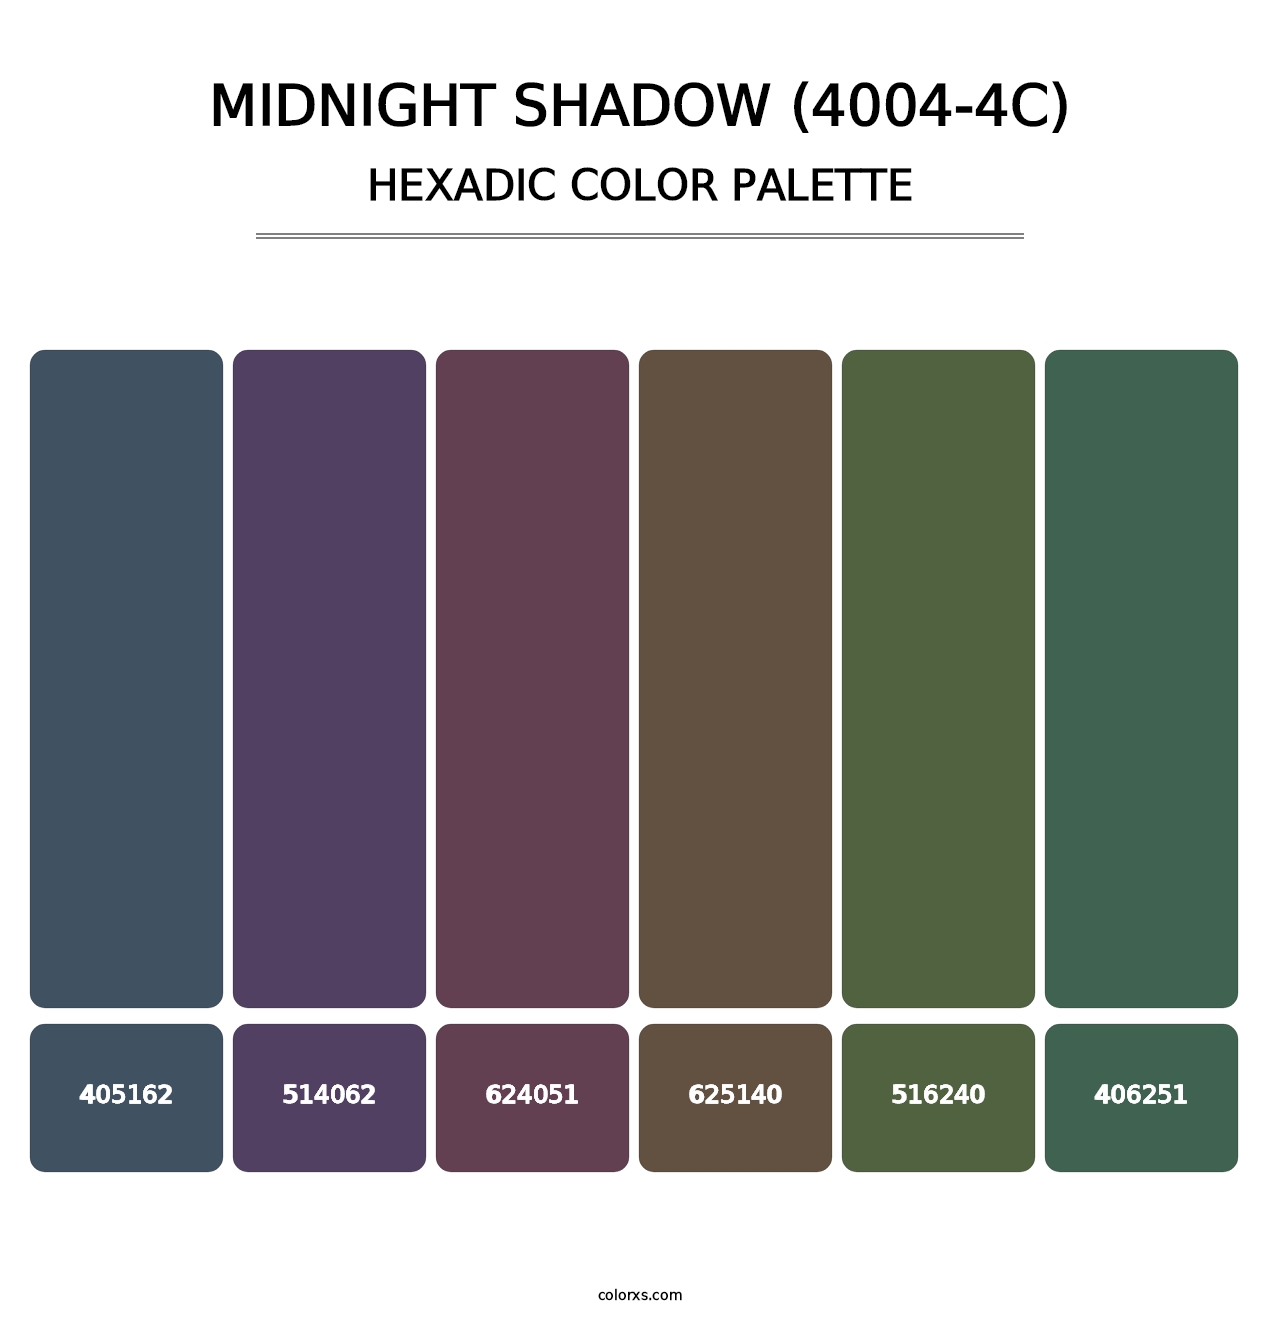 Midnight Shadow (4004-4C) - Hexadic Color Palette